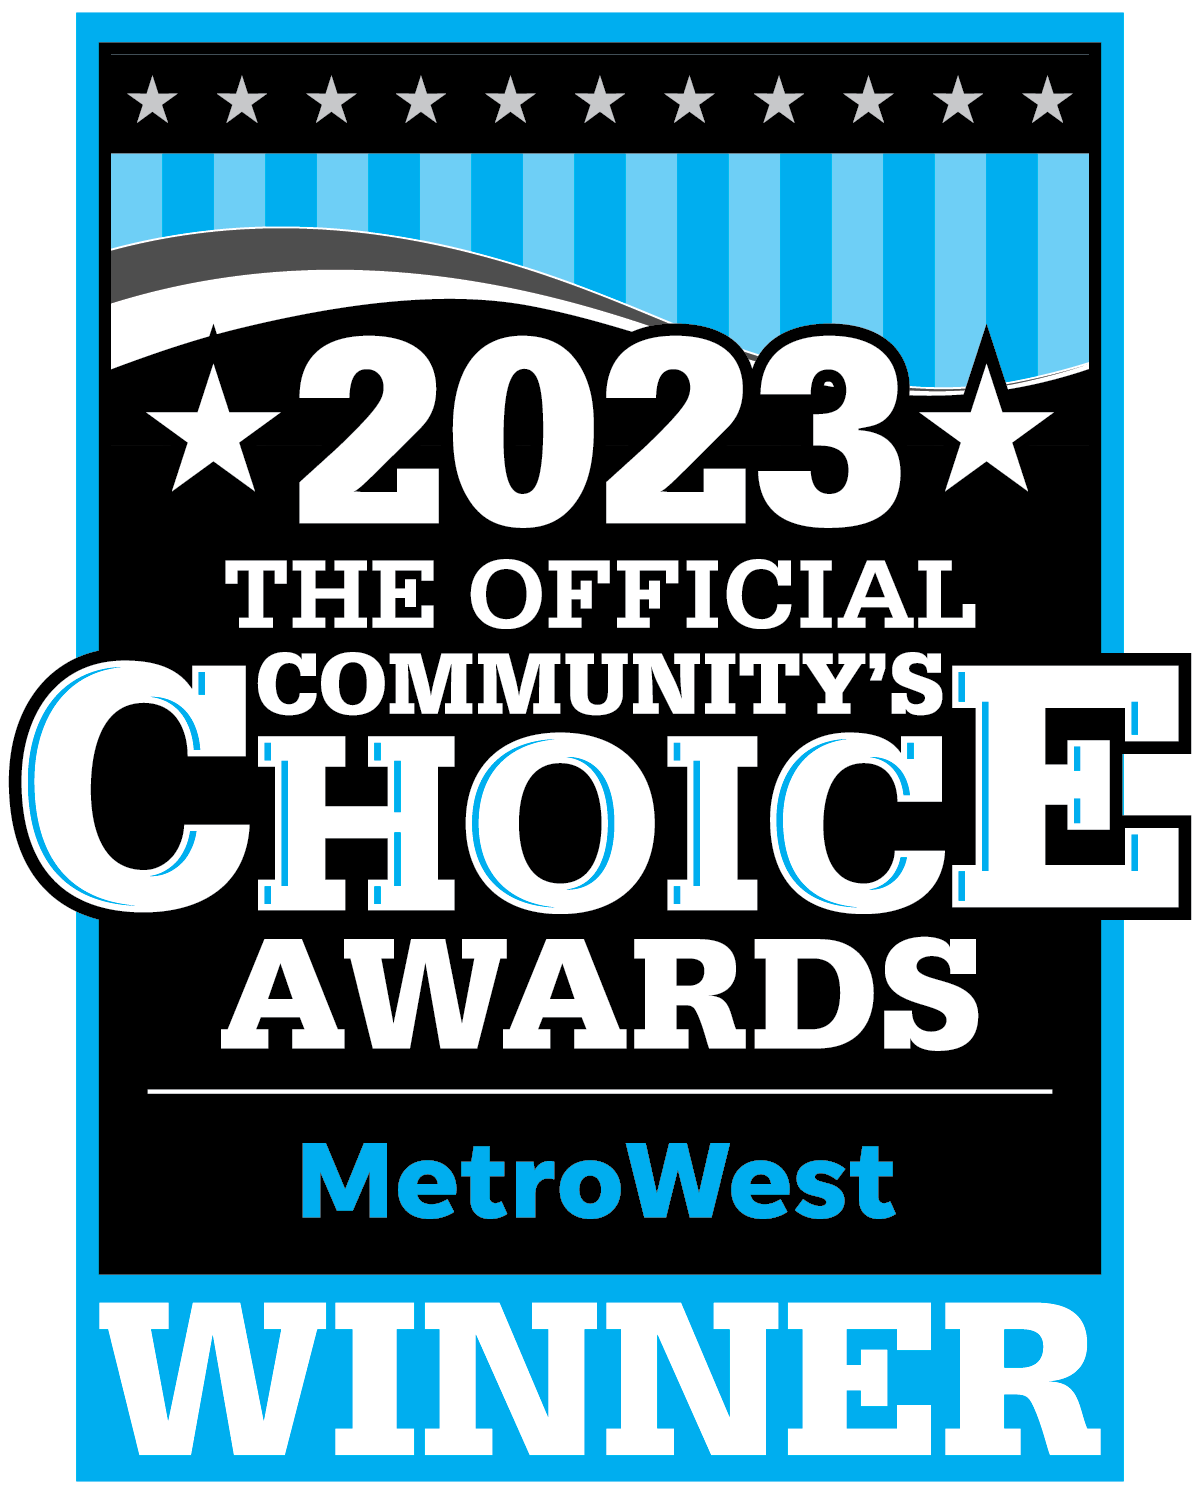 Community's Choice Awards - MetroWest Winner 2023